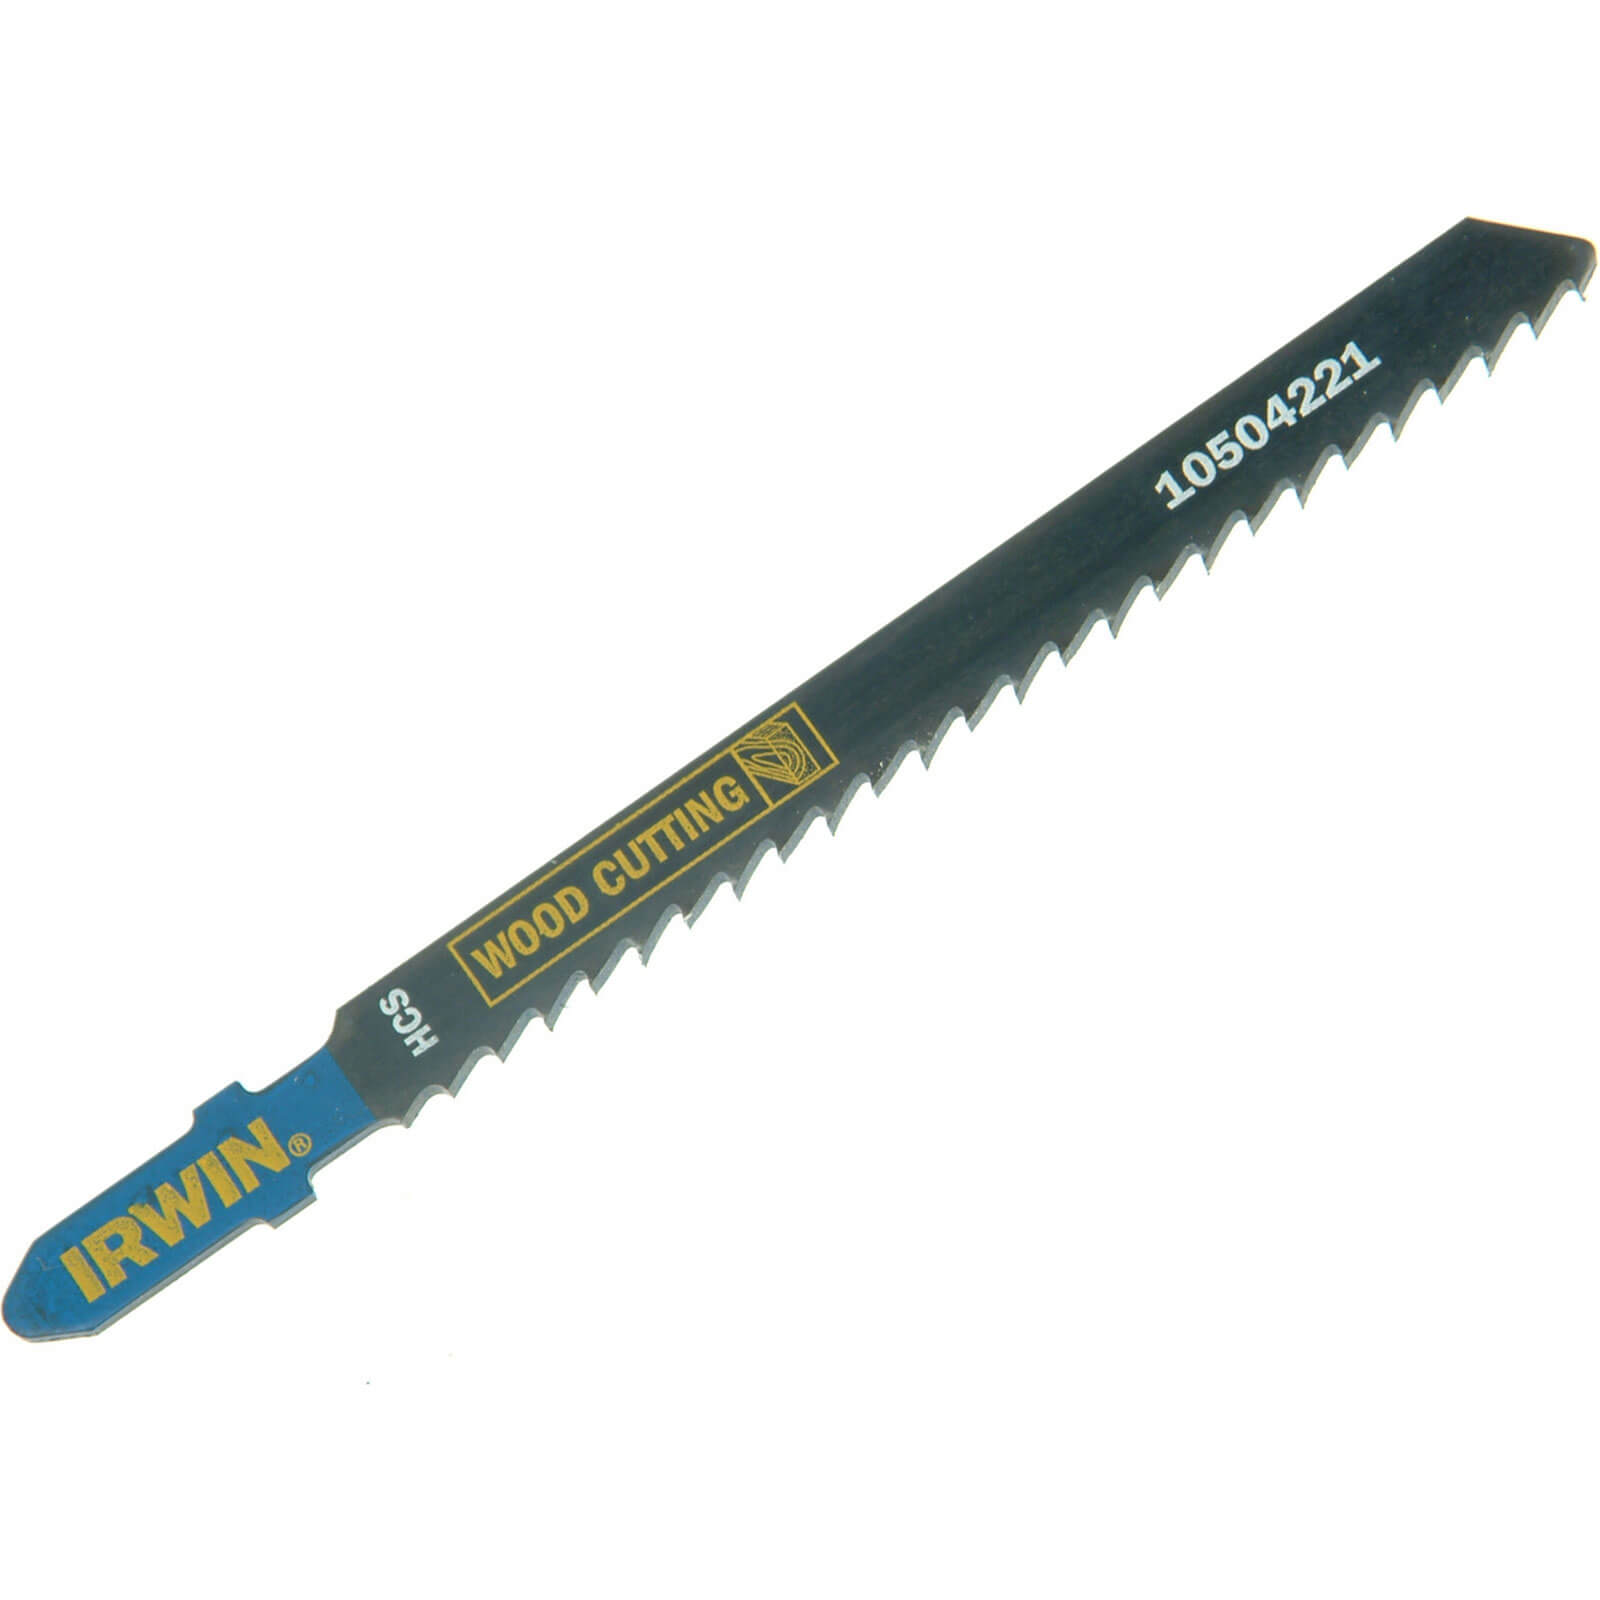 Photos - Power Tool Accessory IRWIN T301CD T Shank Wood Cutting Jigsaw Blades Pack of 5 IRW10504229 